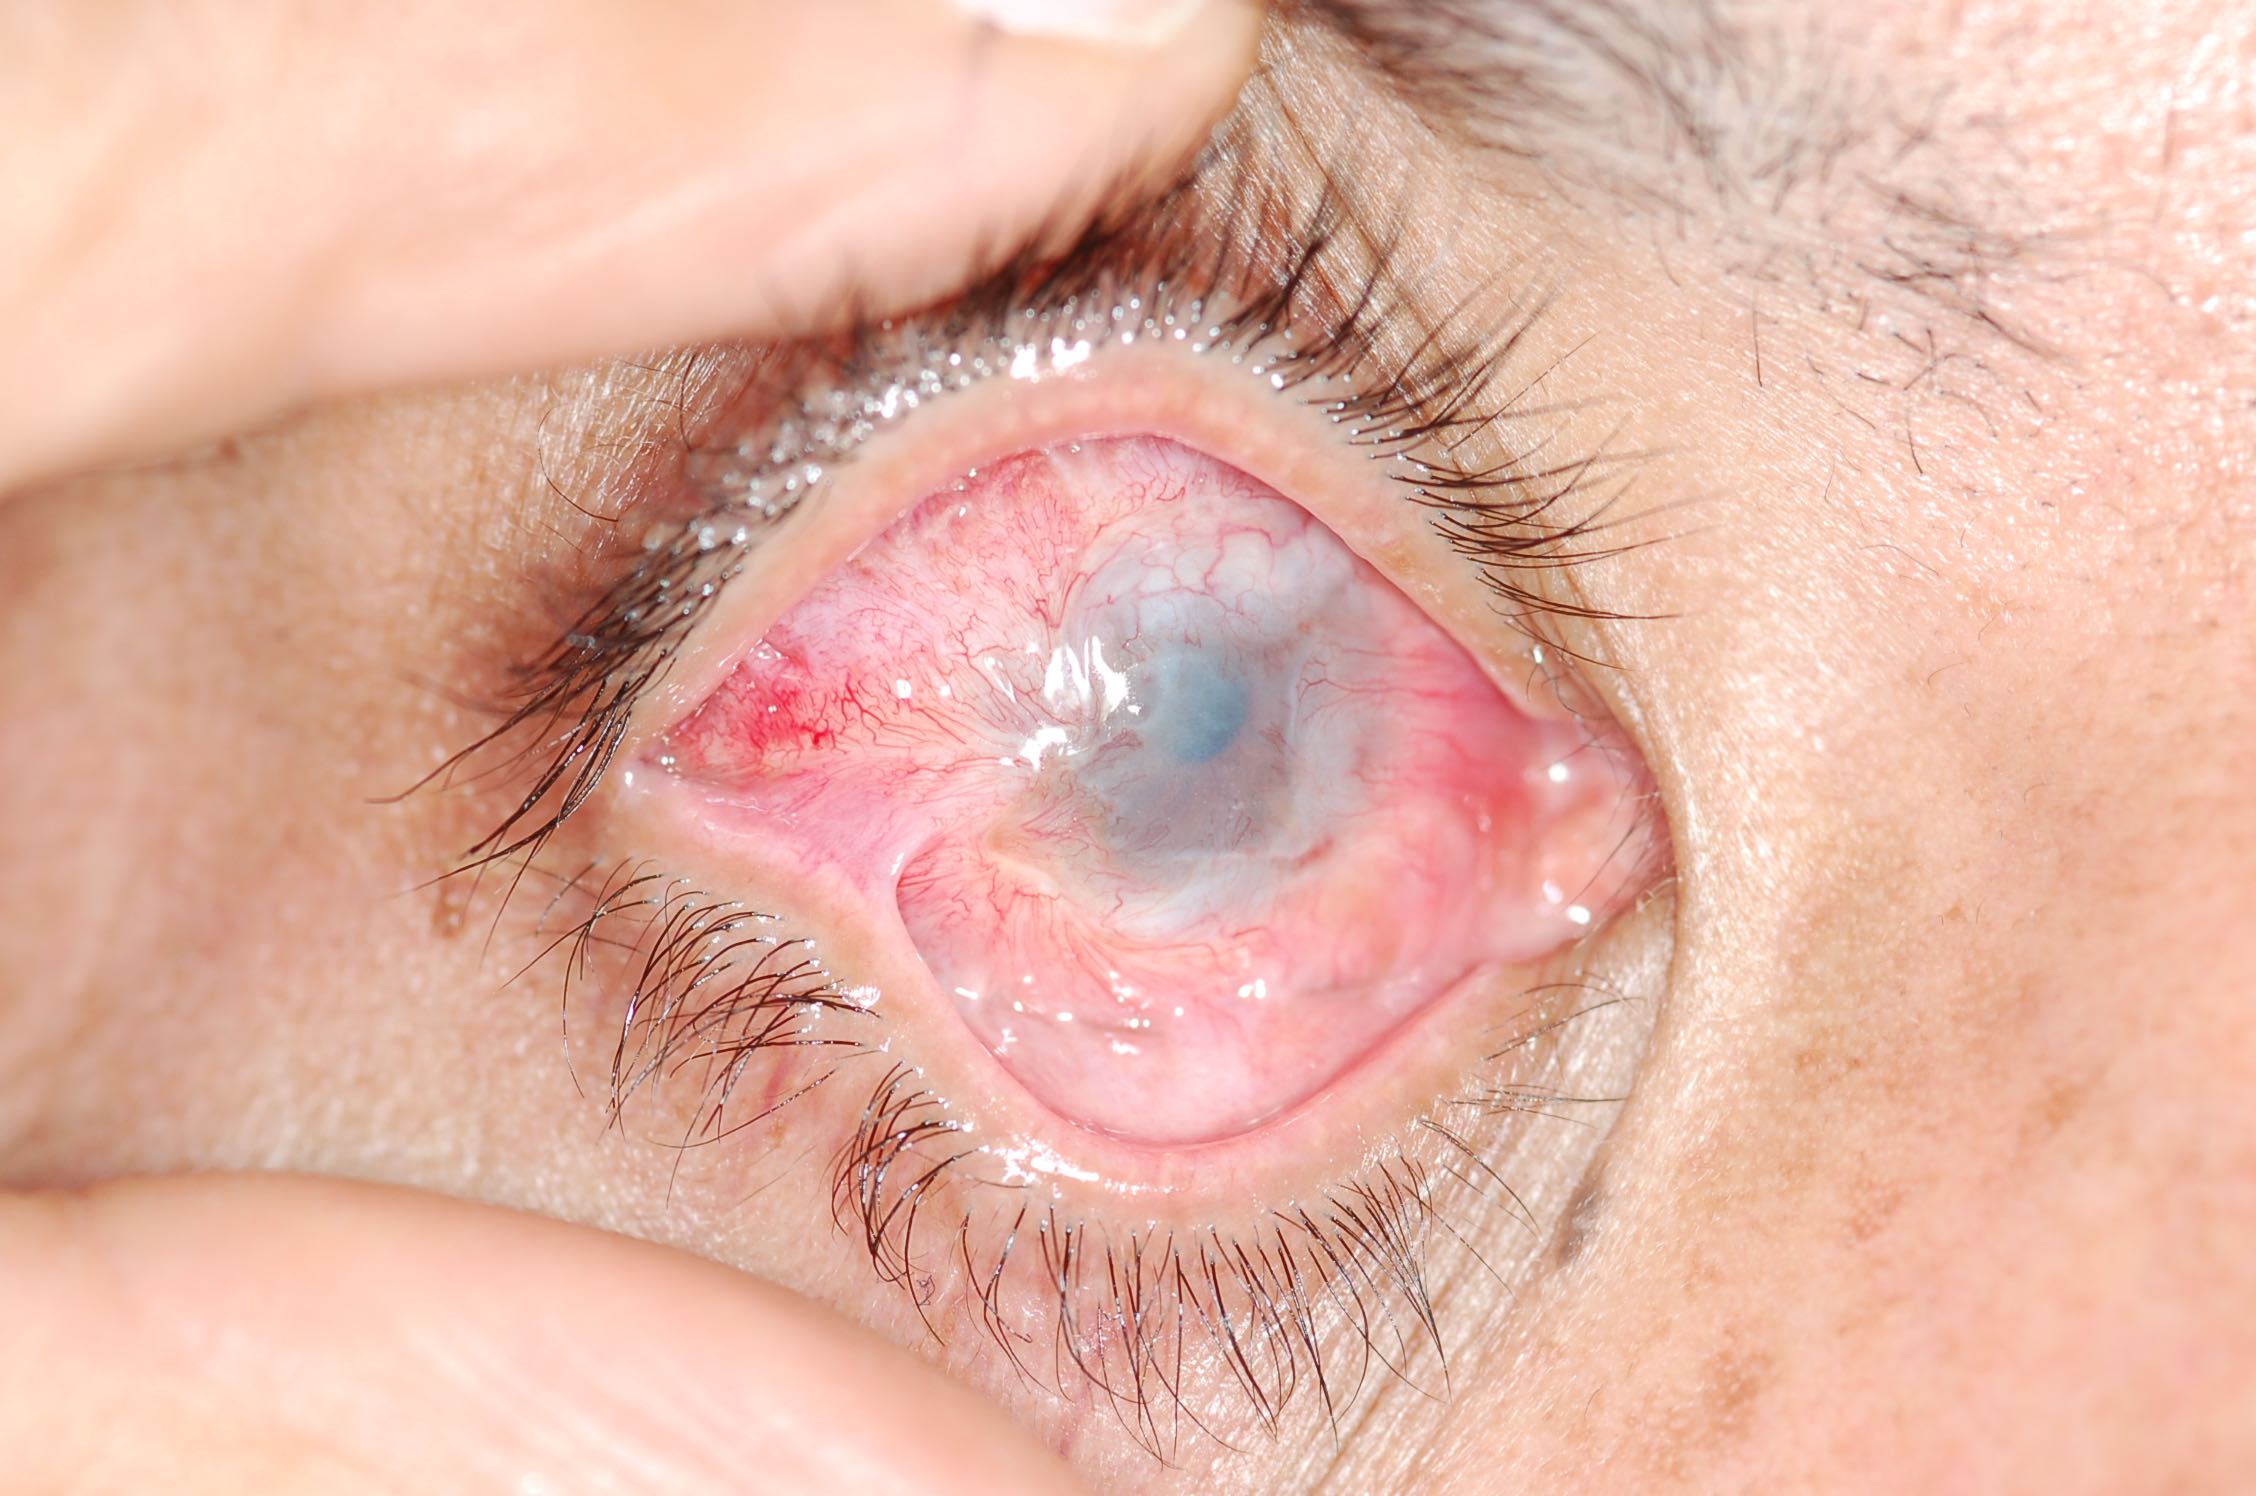 Severe alkali burn to the right eye